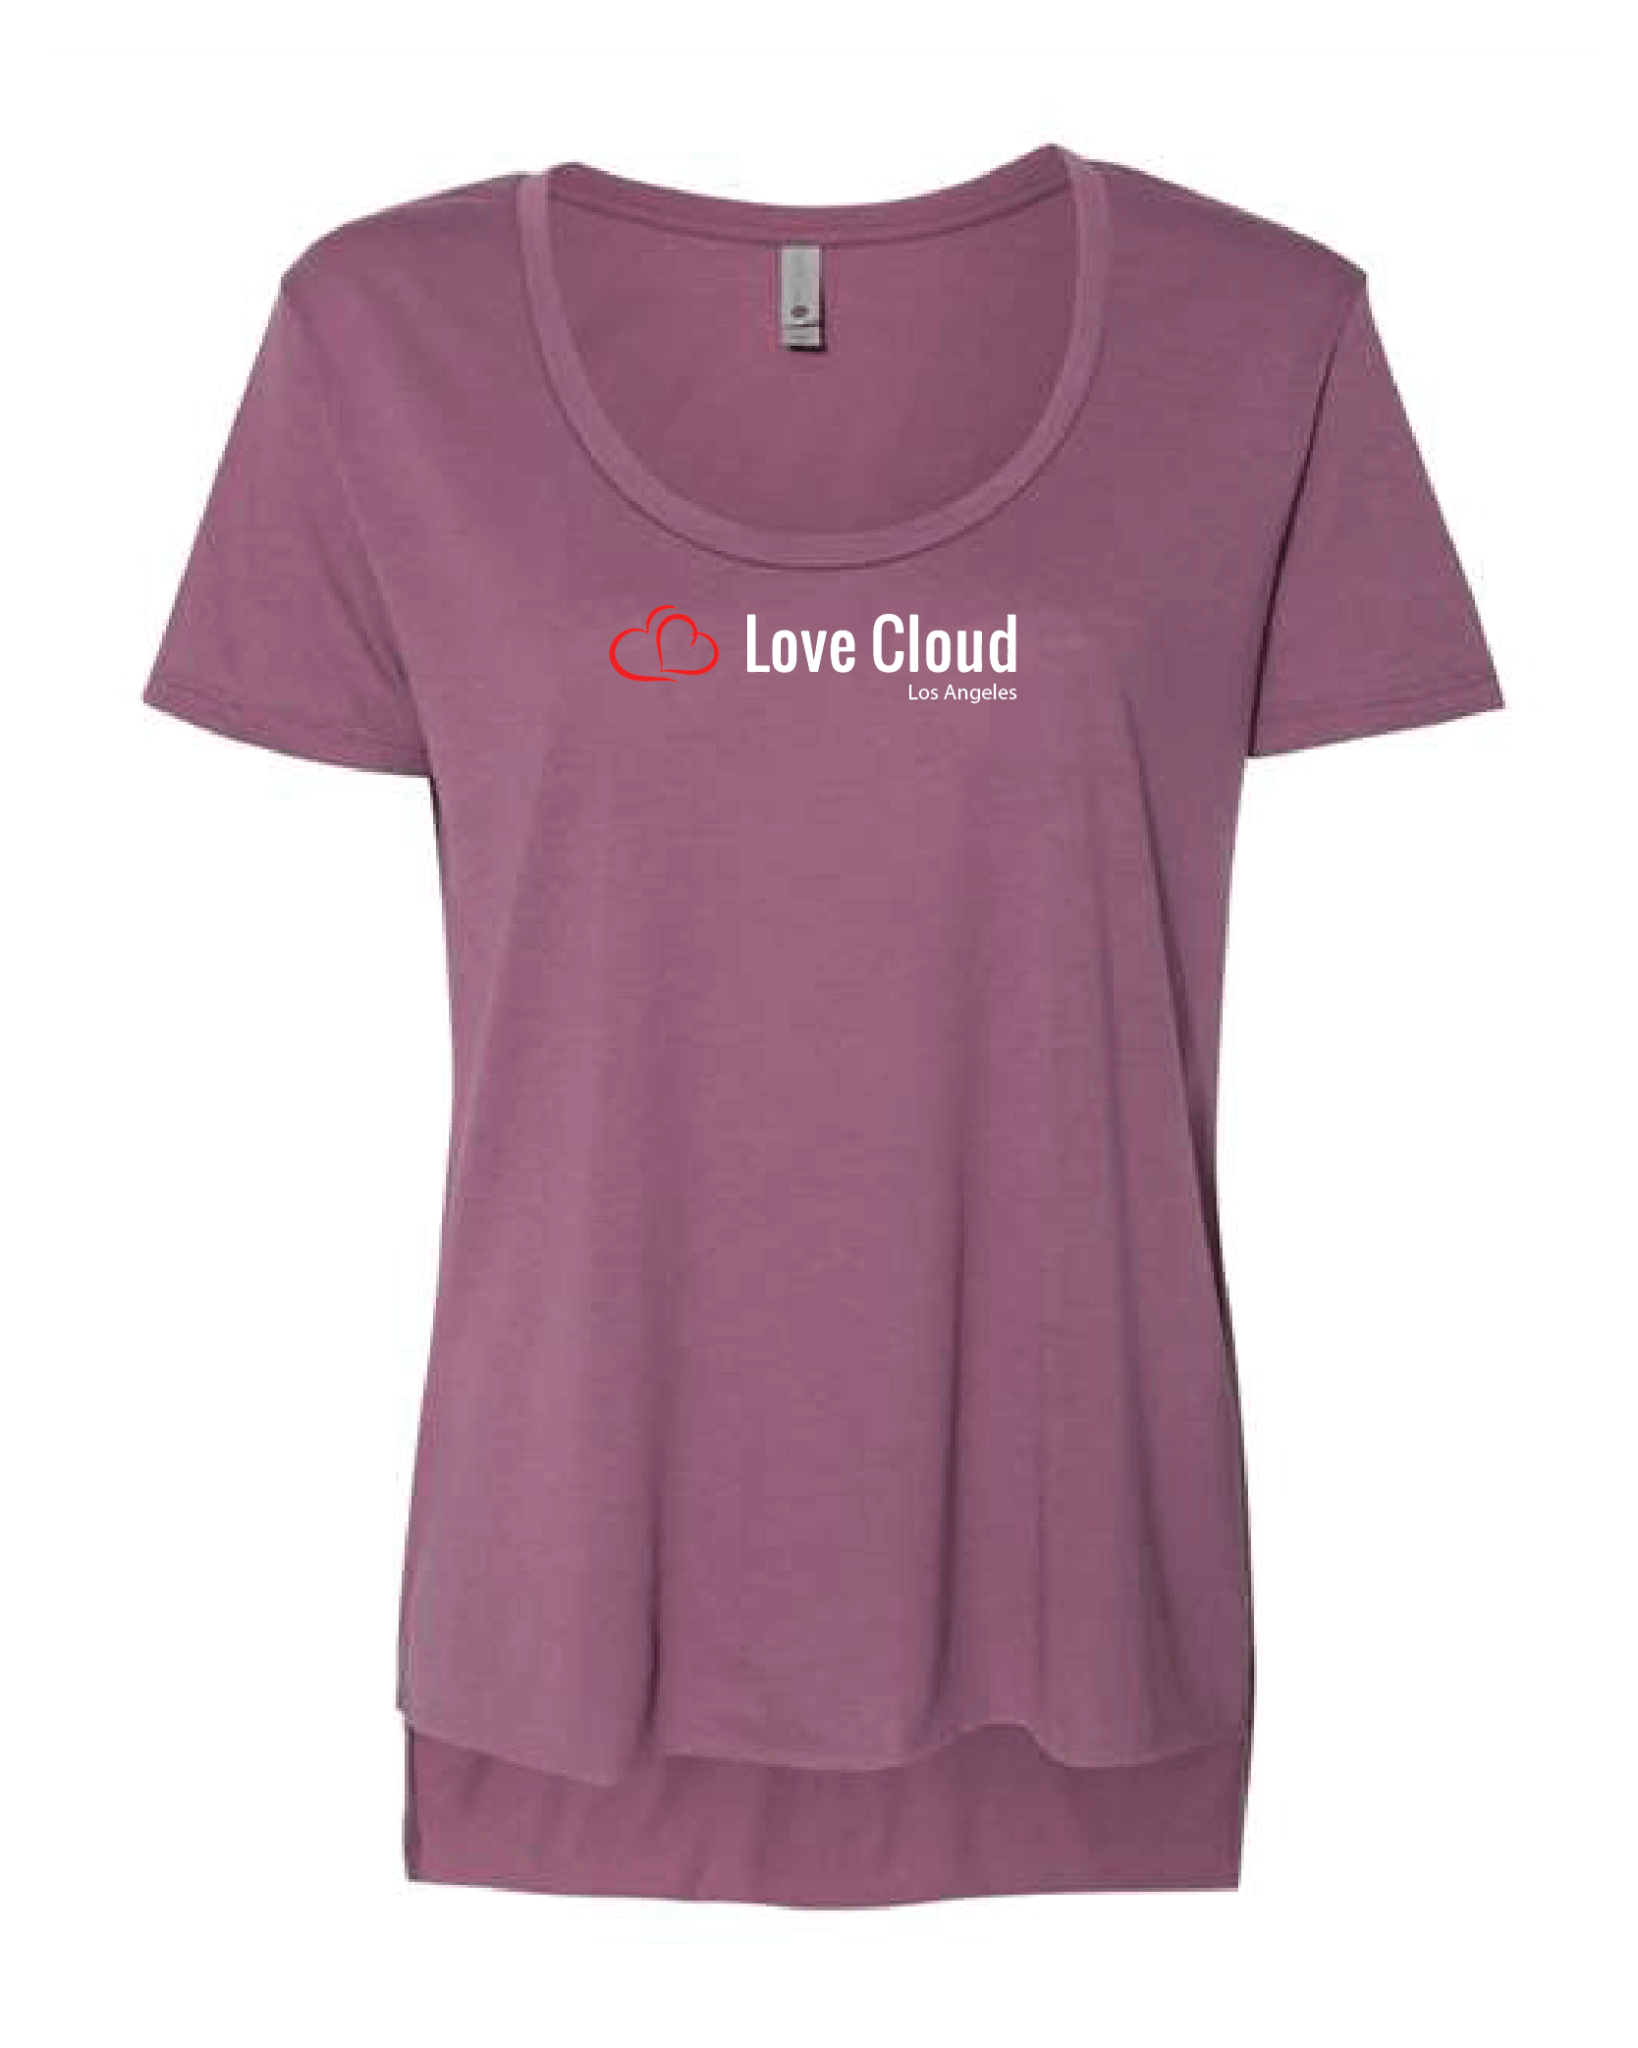 Men's Love Cloud Tee - Undaunted Clothing Product Designer